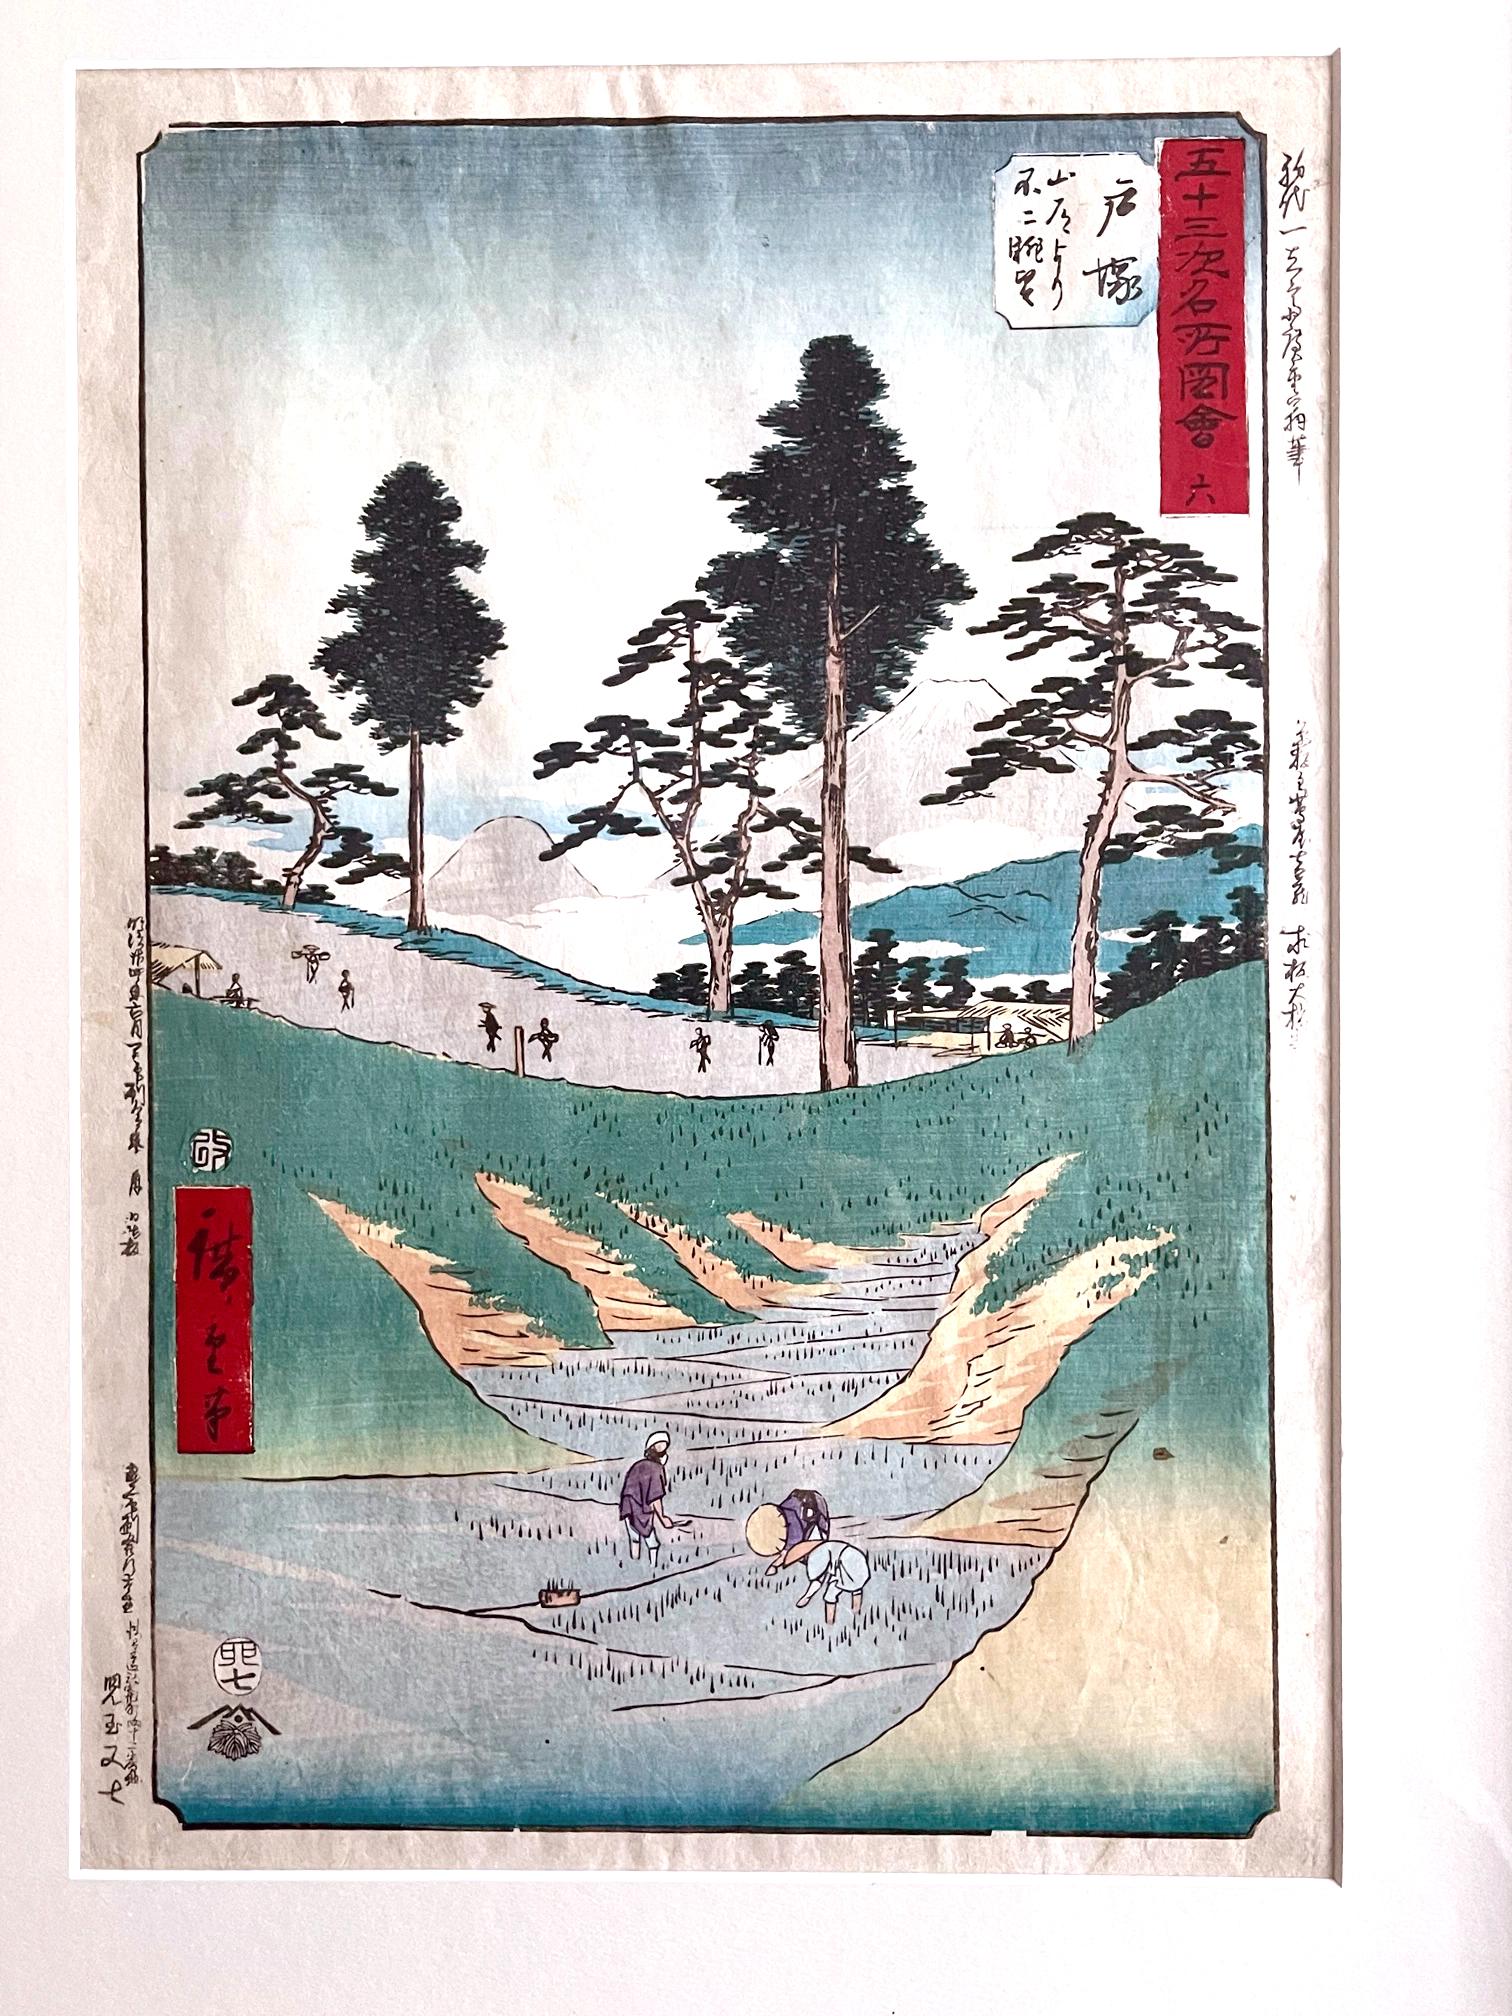 Artist: Utagawa Hiroshige (1797 - 1858)
Series: The Fifty-three Stations of the Tokaido (Upright)
Number: 6 Totsuka: View of Fuji from the Mountain Road
(Totsuka, Sando yori Fuji chobo)
Medium: Woodblock Print
Date: 1855
Format: Vertical